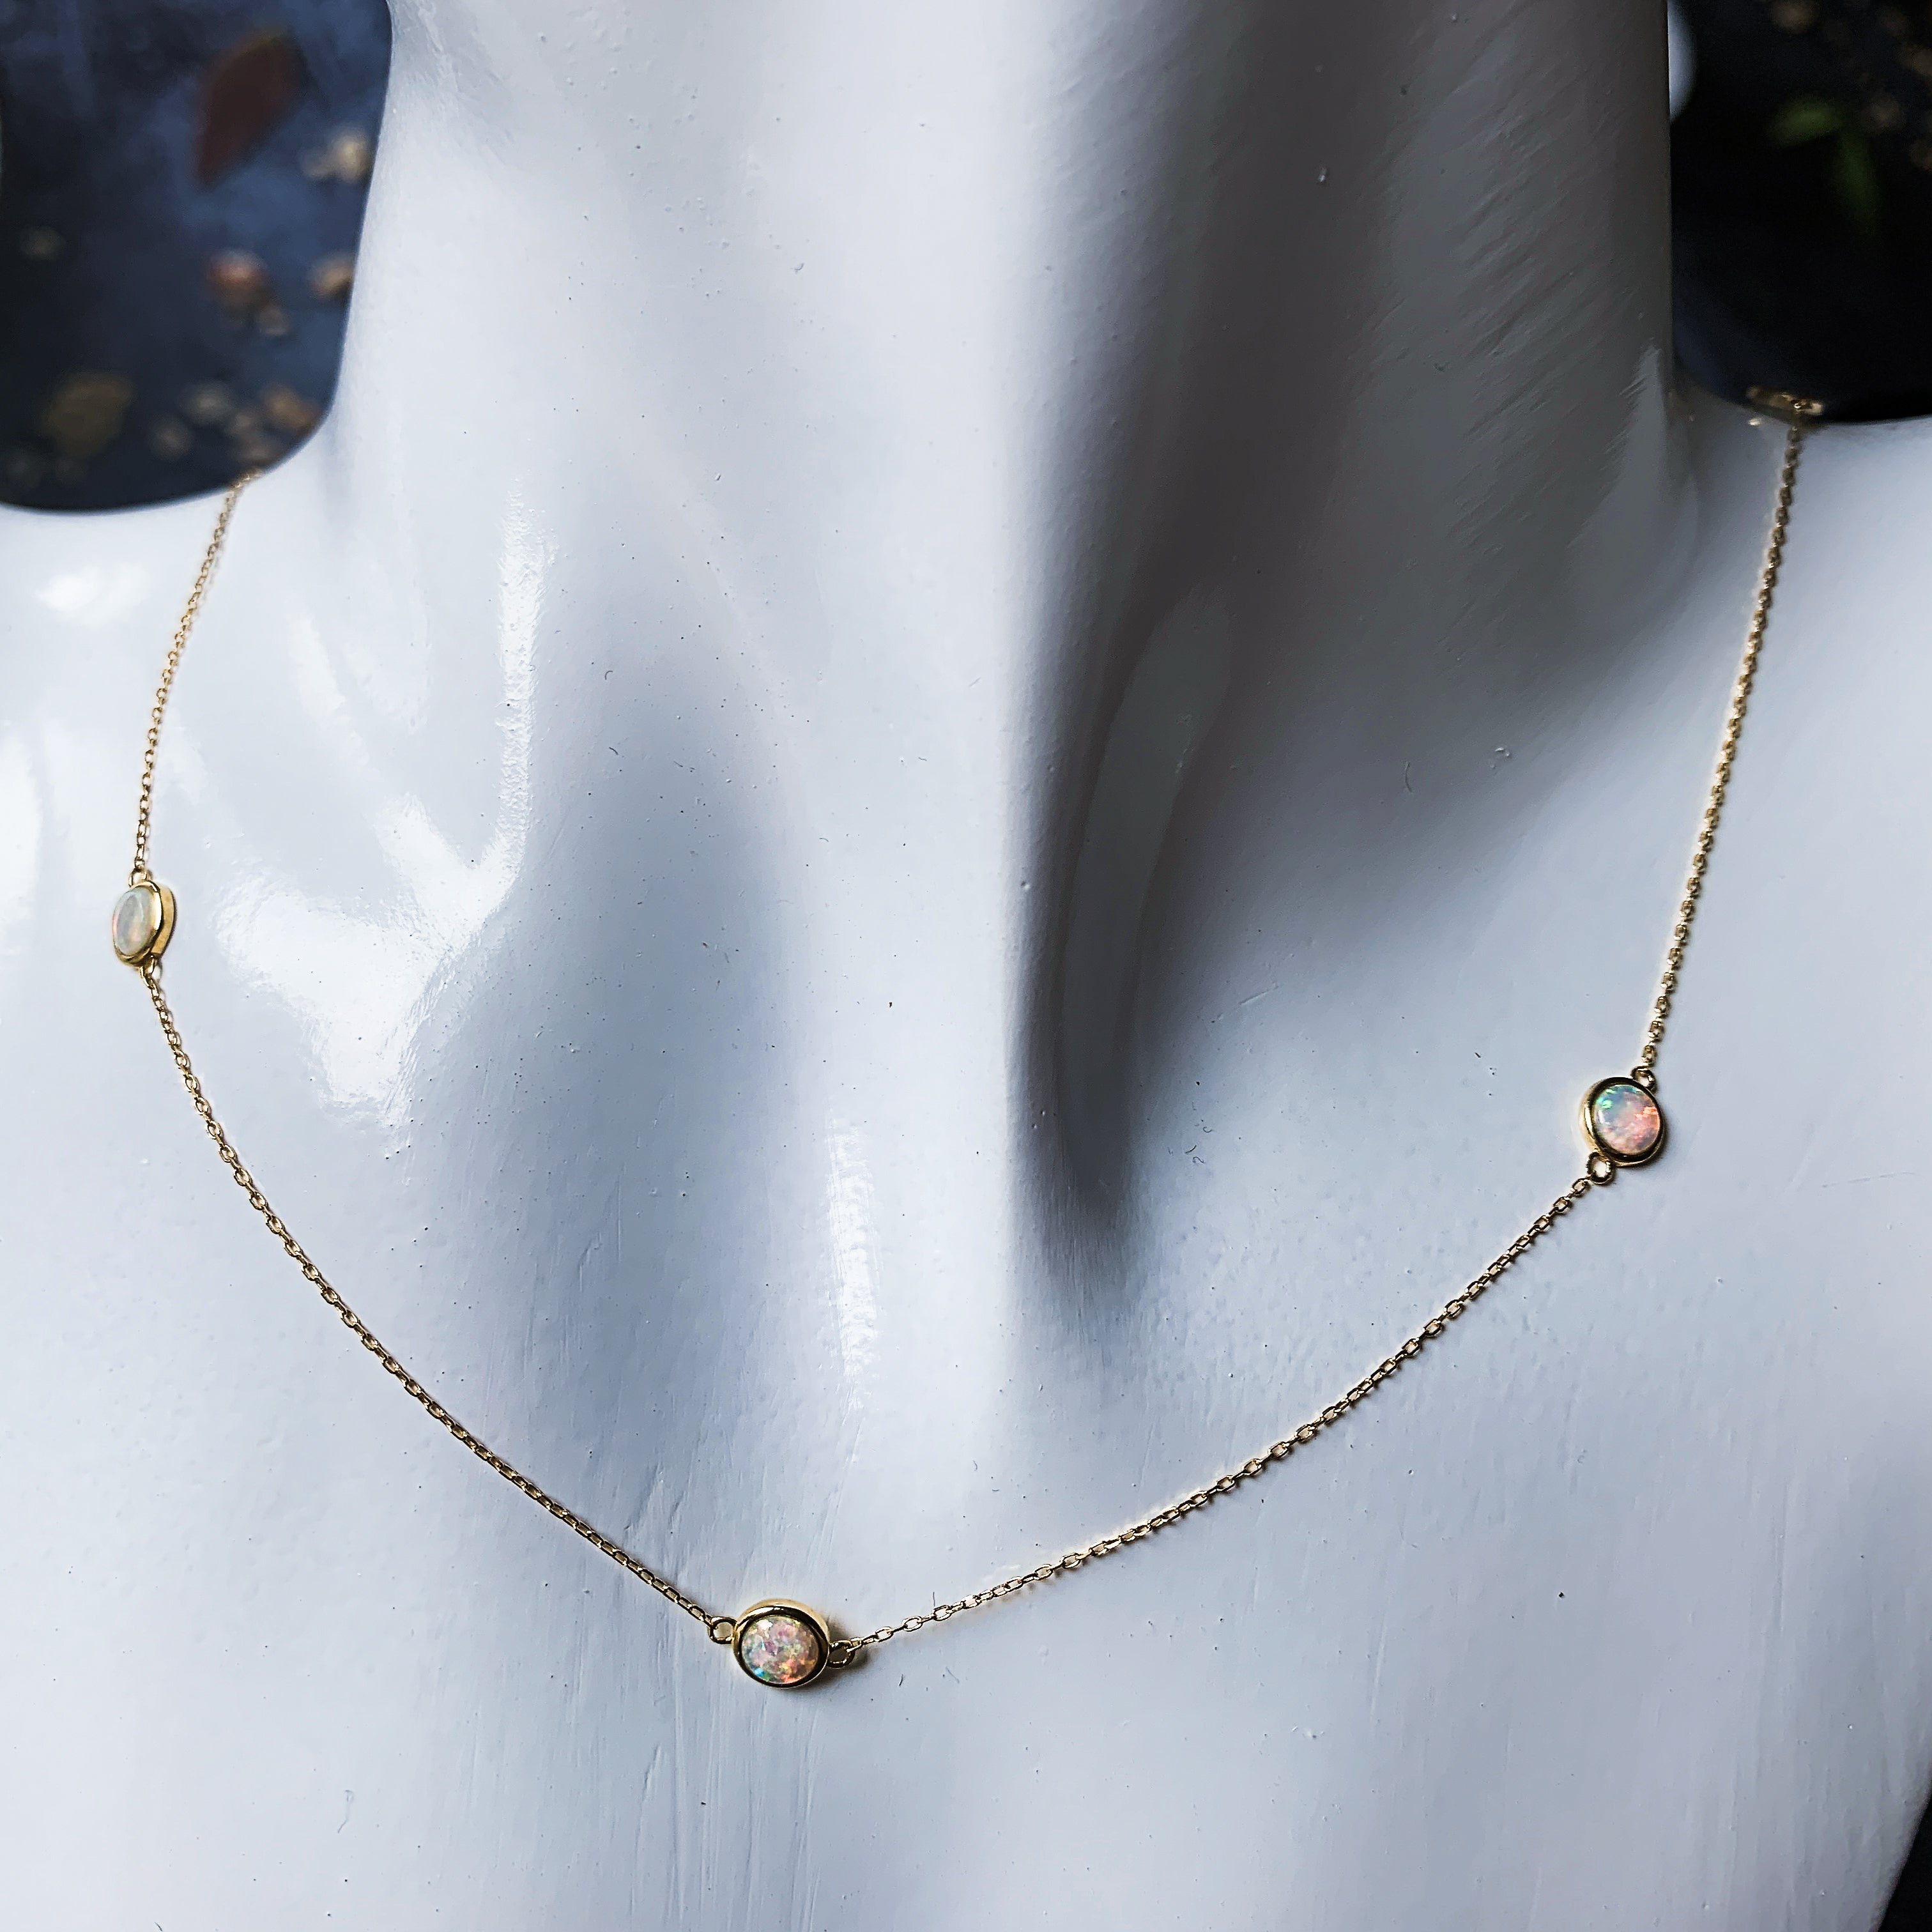 9kt Yellow Gold necklace white Opal spacer - Masterpiece Jewellery Opal & Gems Sydney Australia | Online Shop